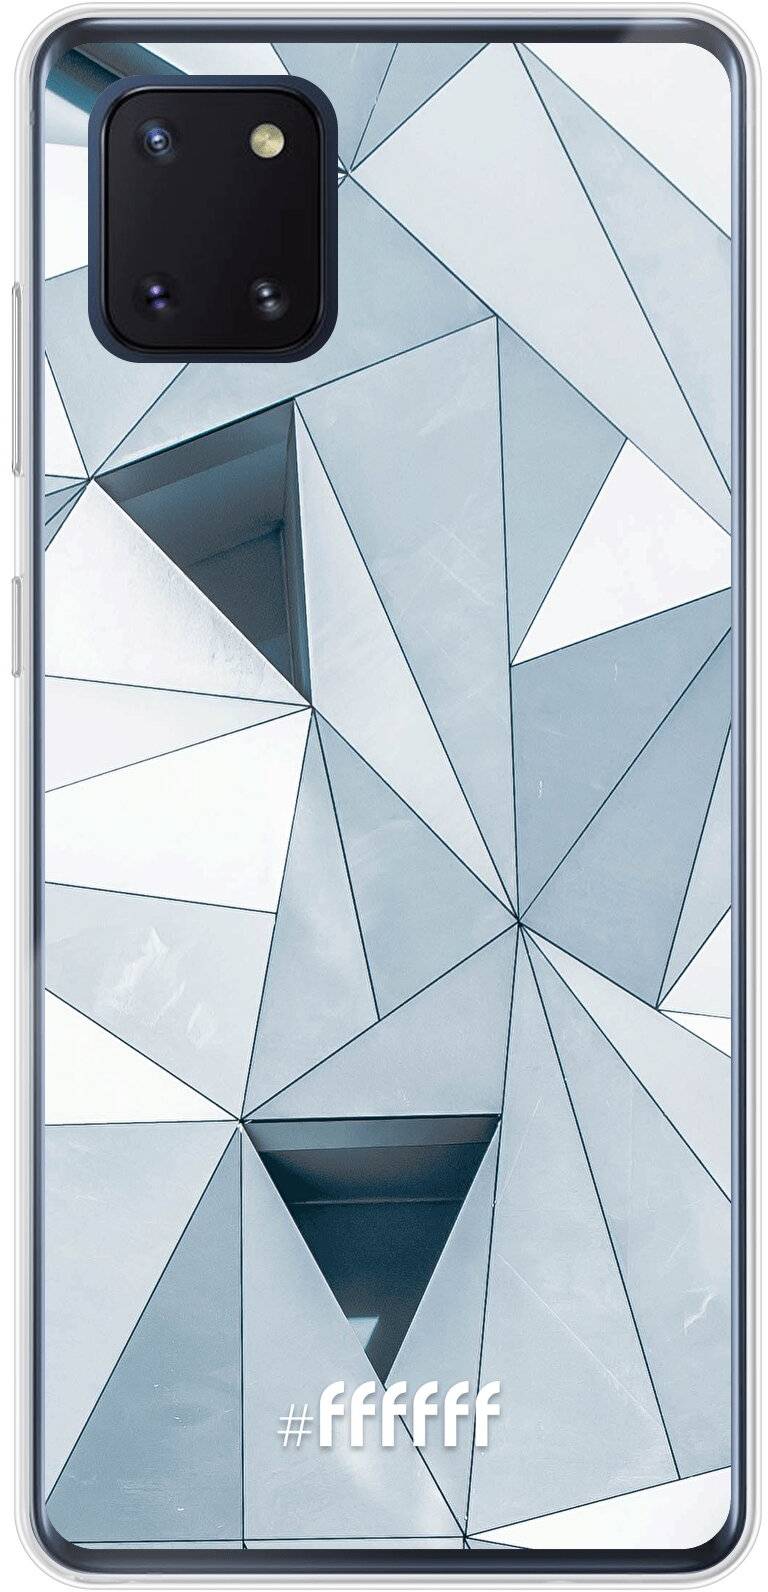 Mirrored Polygon Galaxy Note 10 Lite